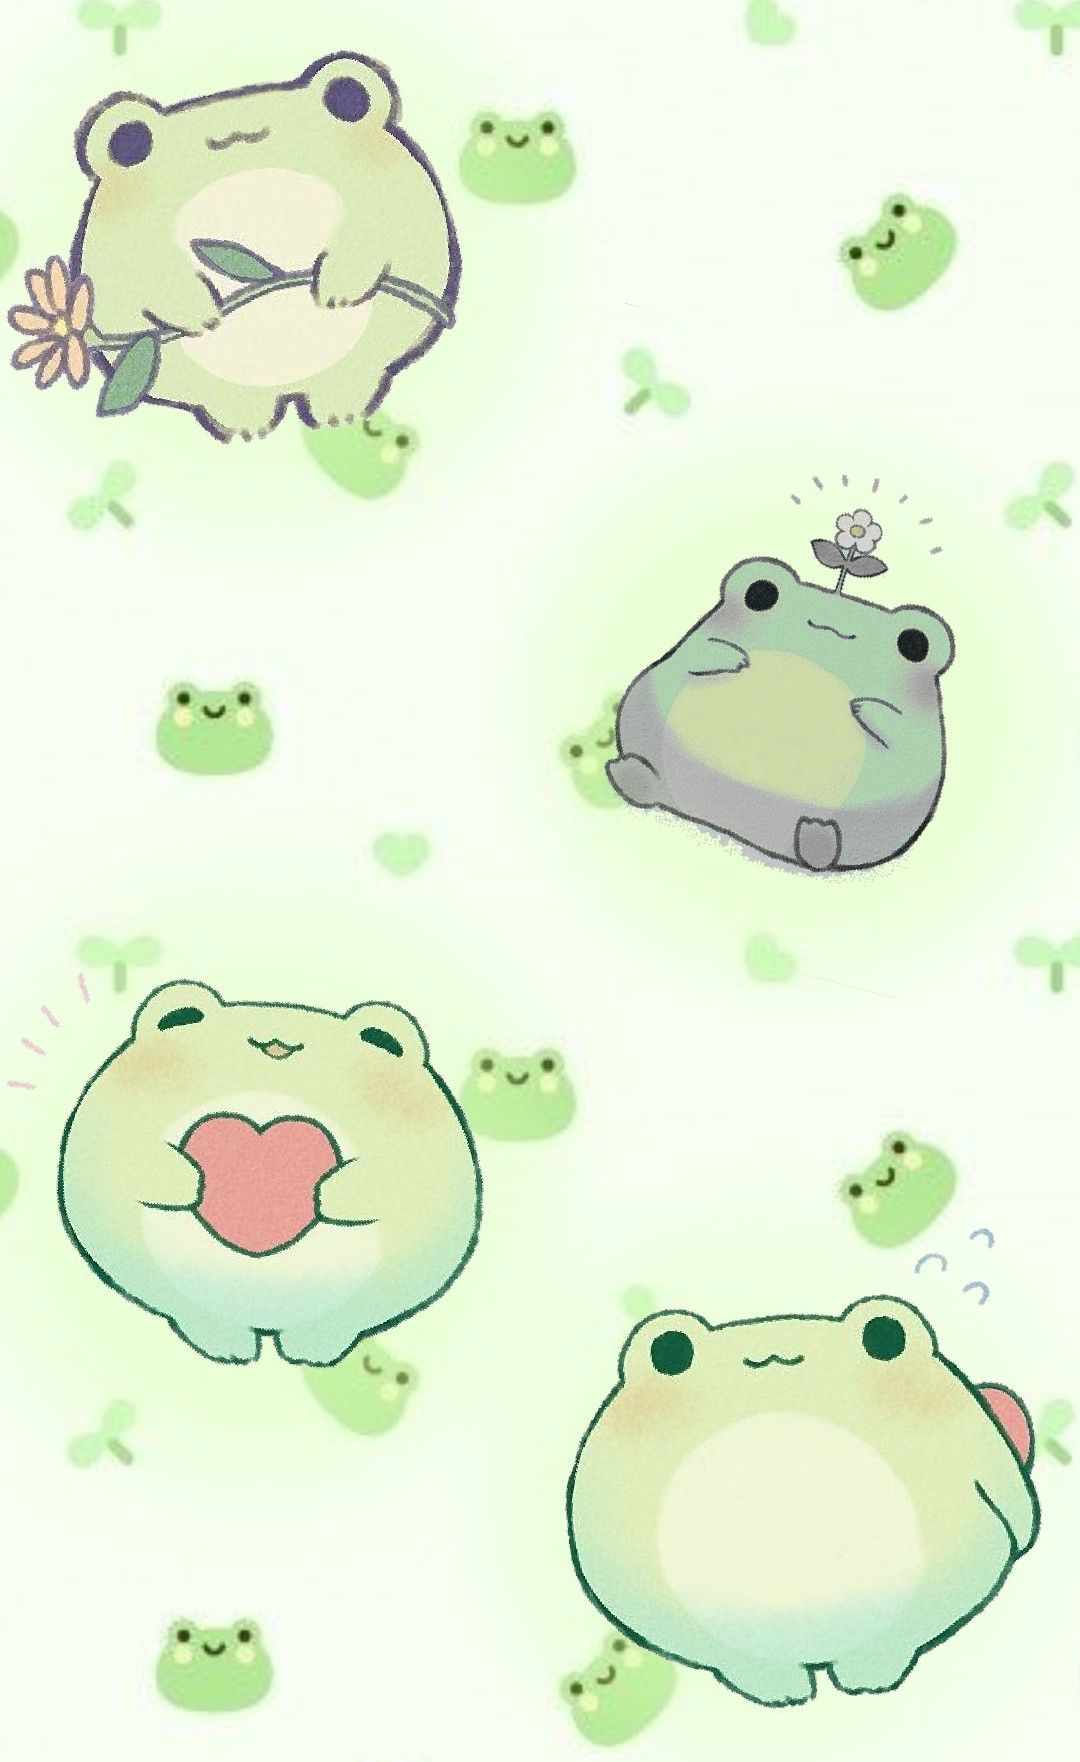 Cute Frog Wallpaper. Frog wallpaper, Cute animal drawings kawaii, Cute little drawings